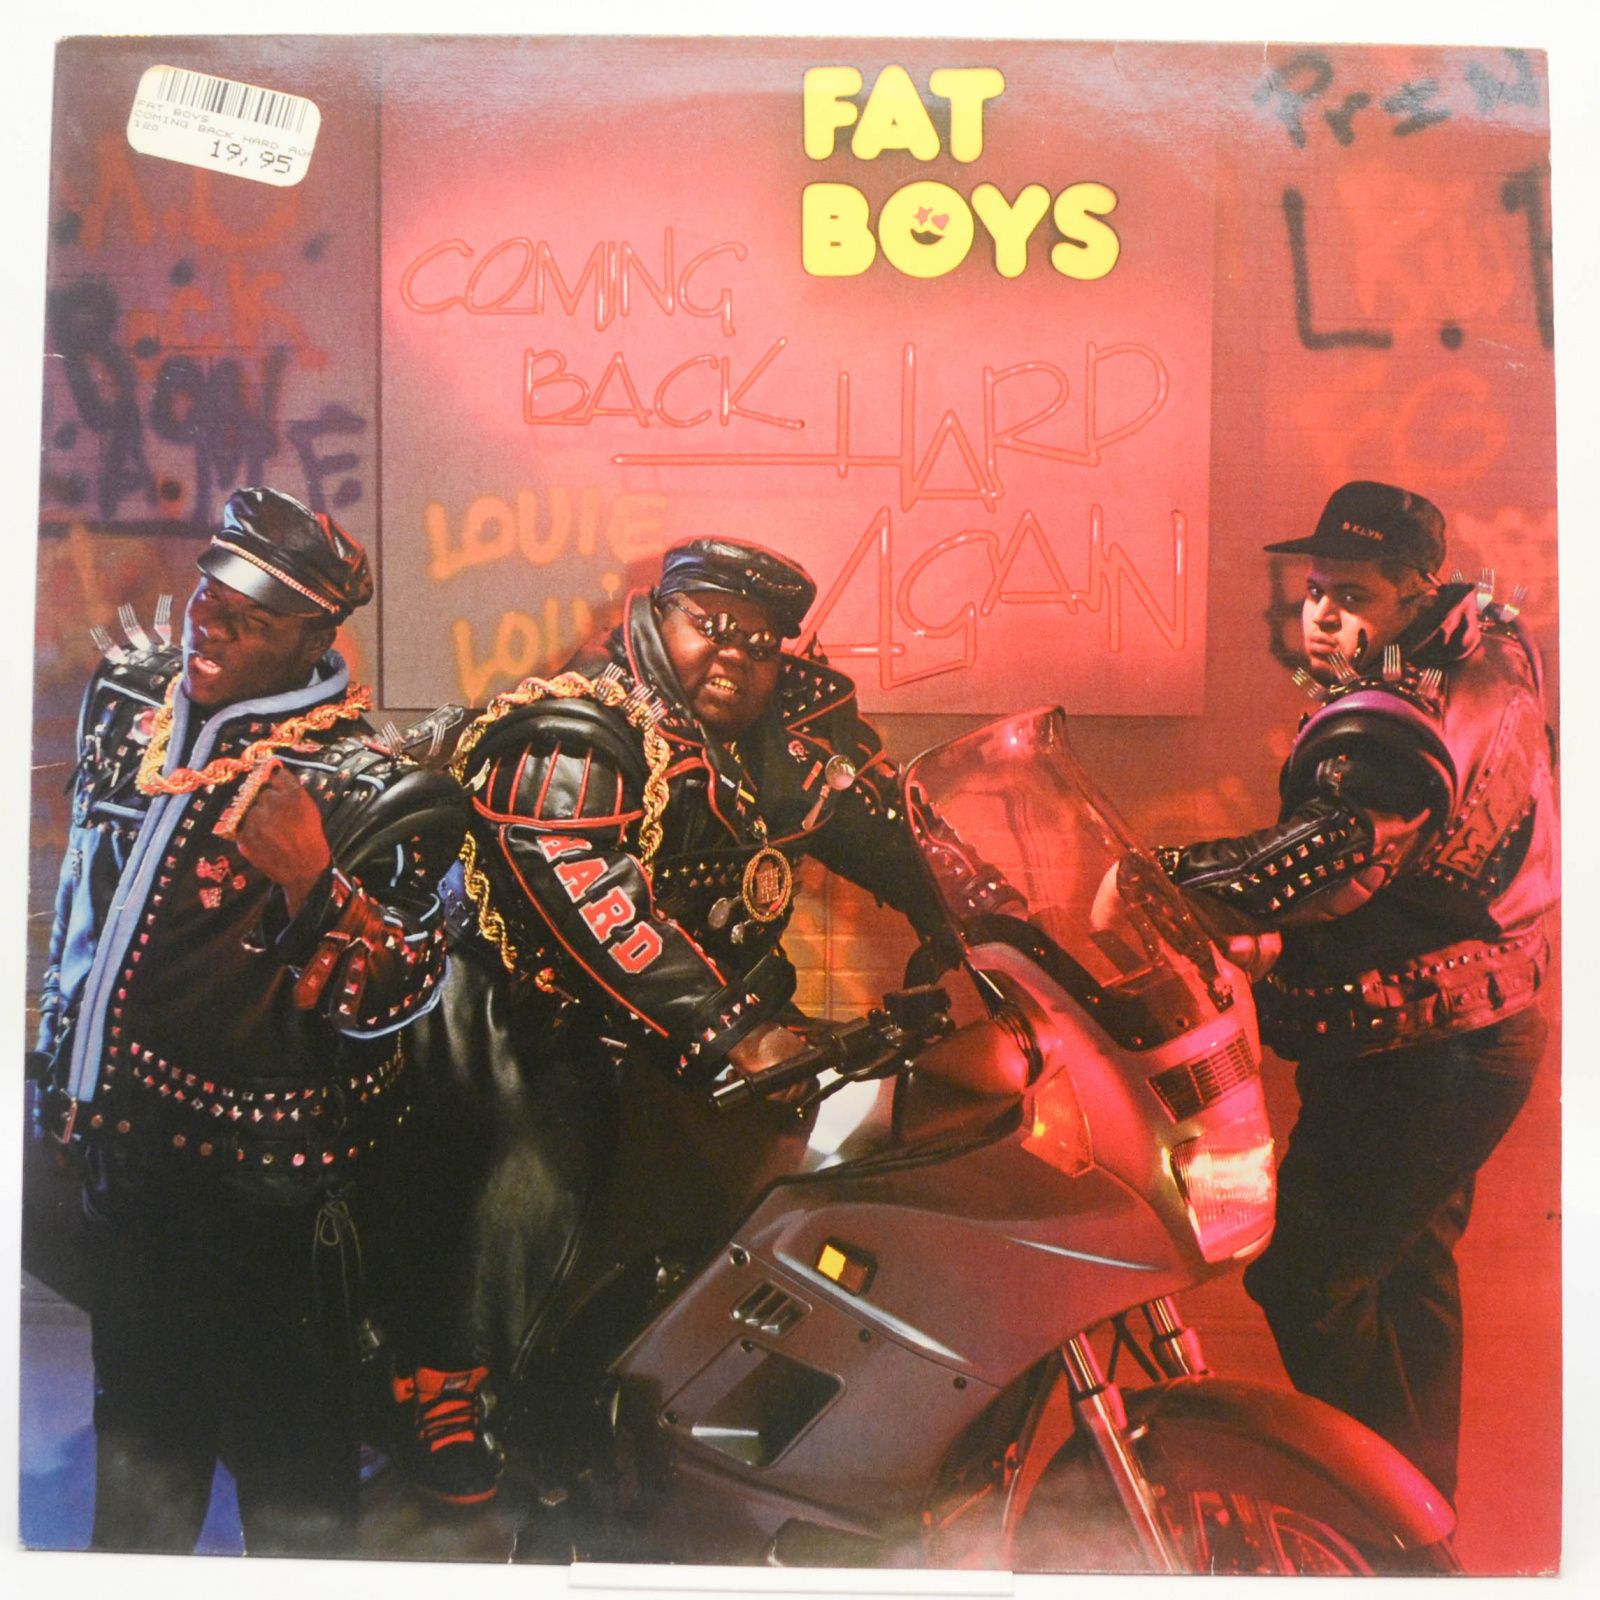 Fat Boys — Coming Back Hard Again, 1988